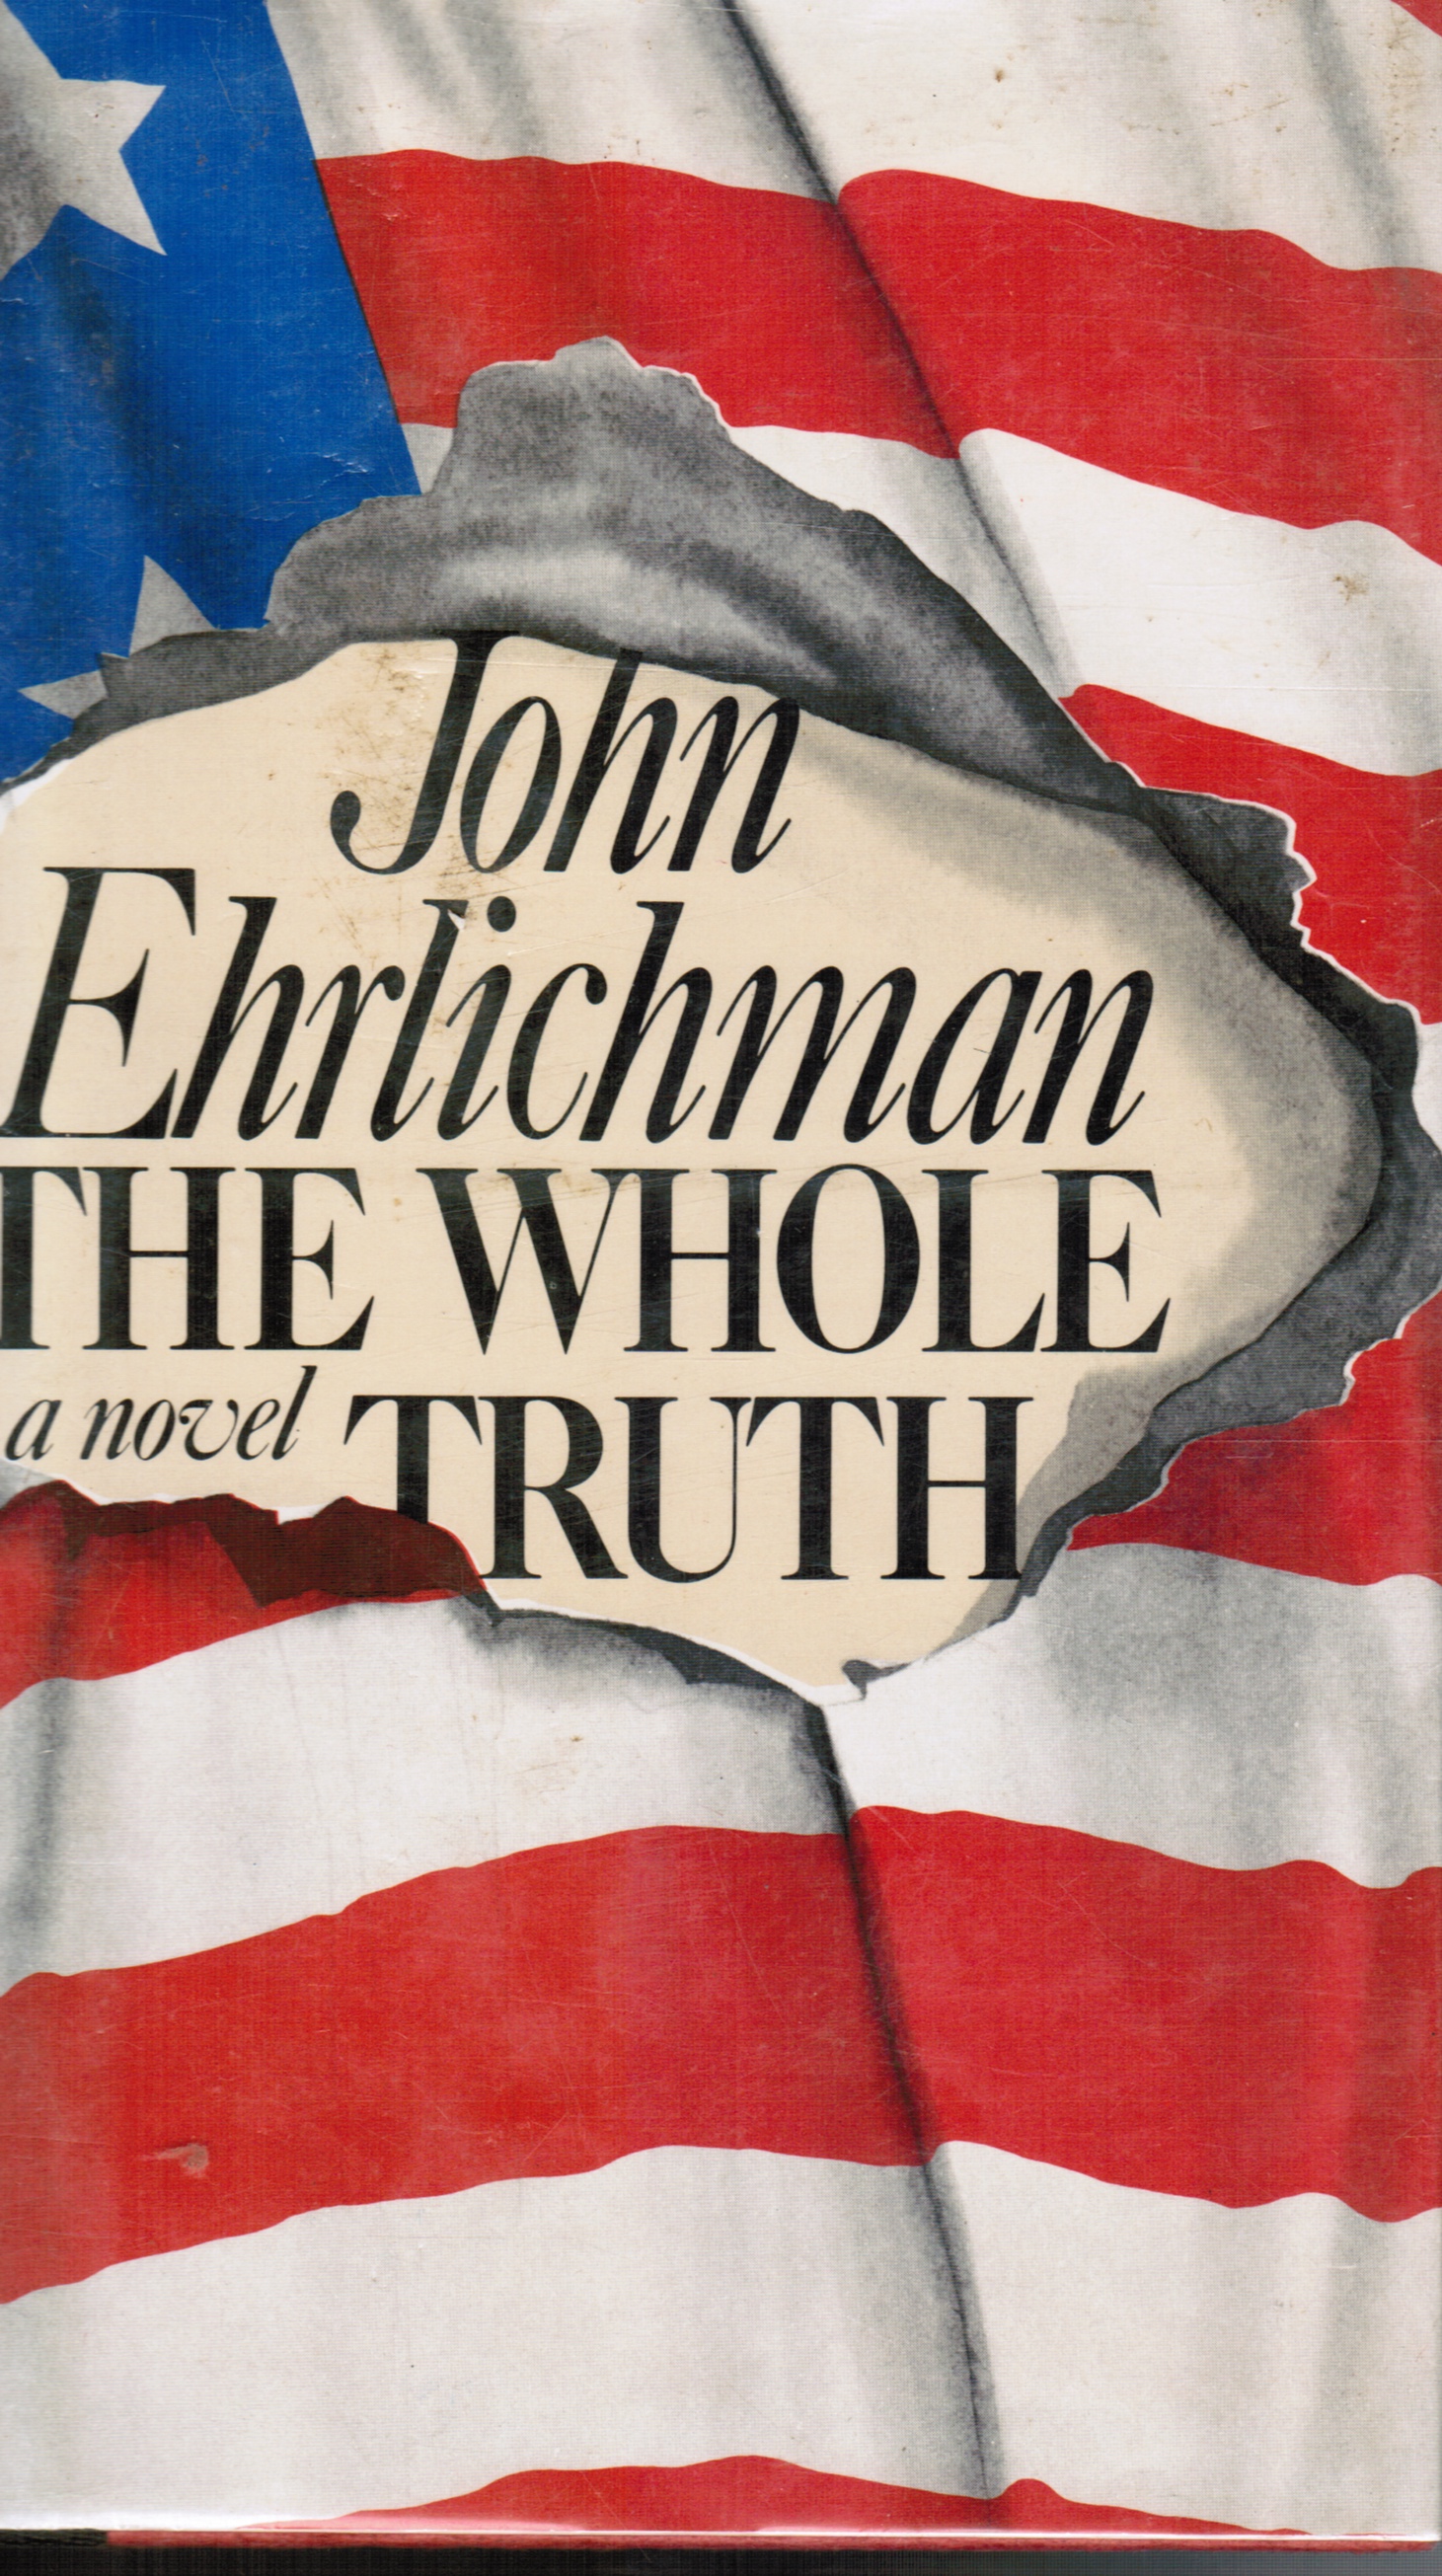 EHRLICHMAN, JOHN - The Whole Truth